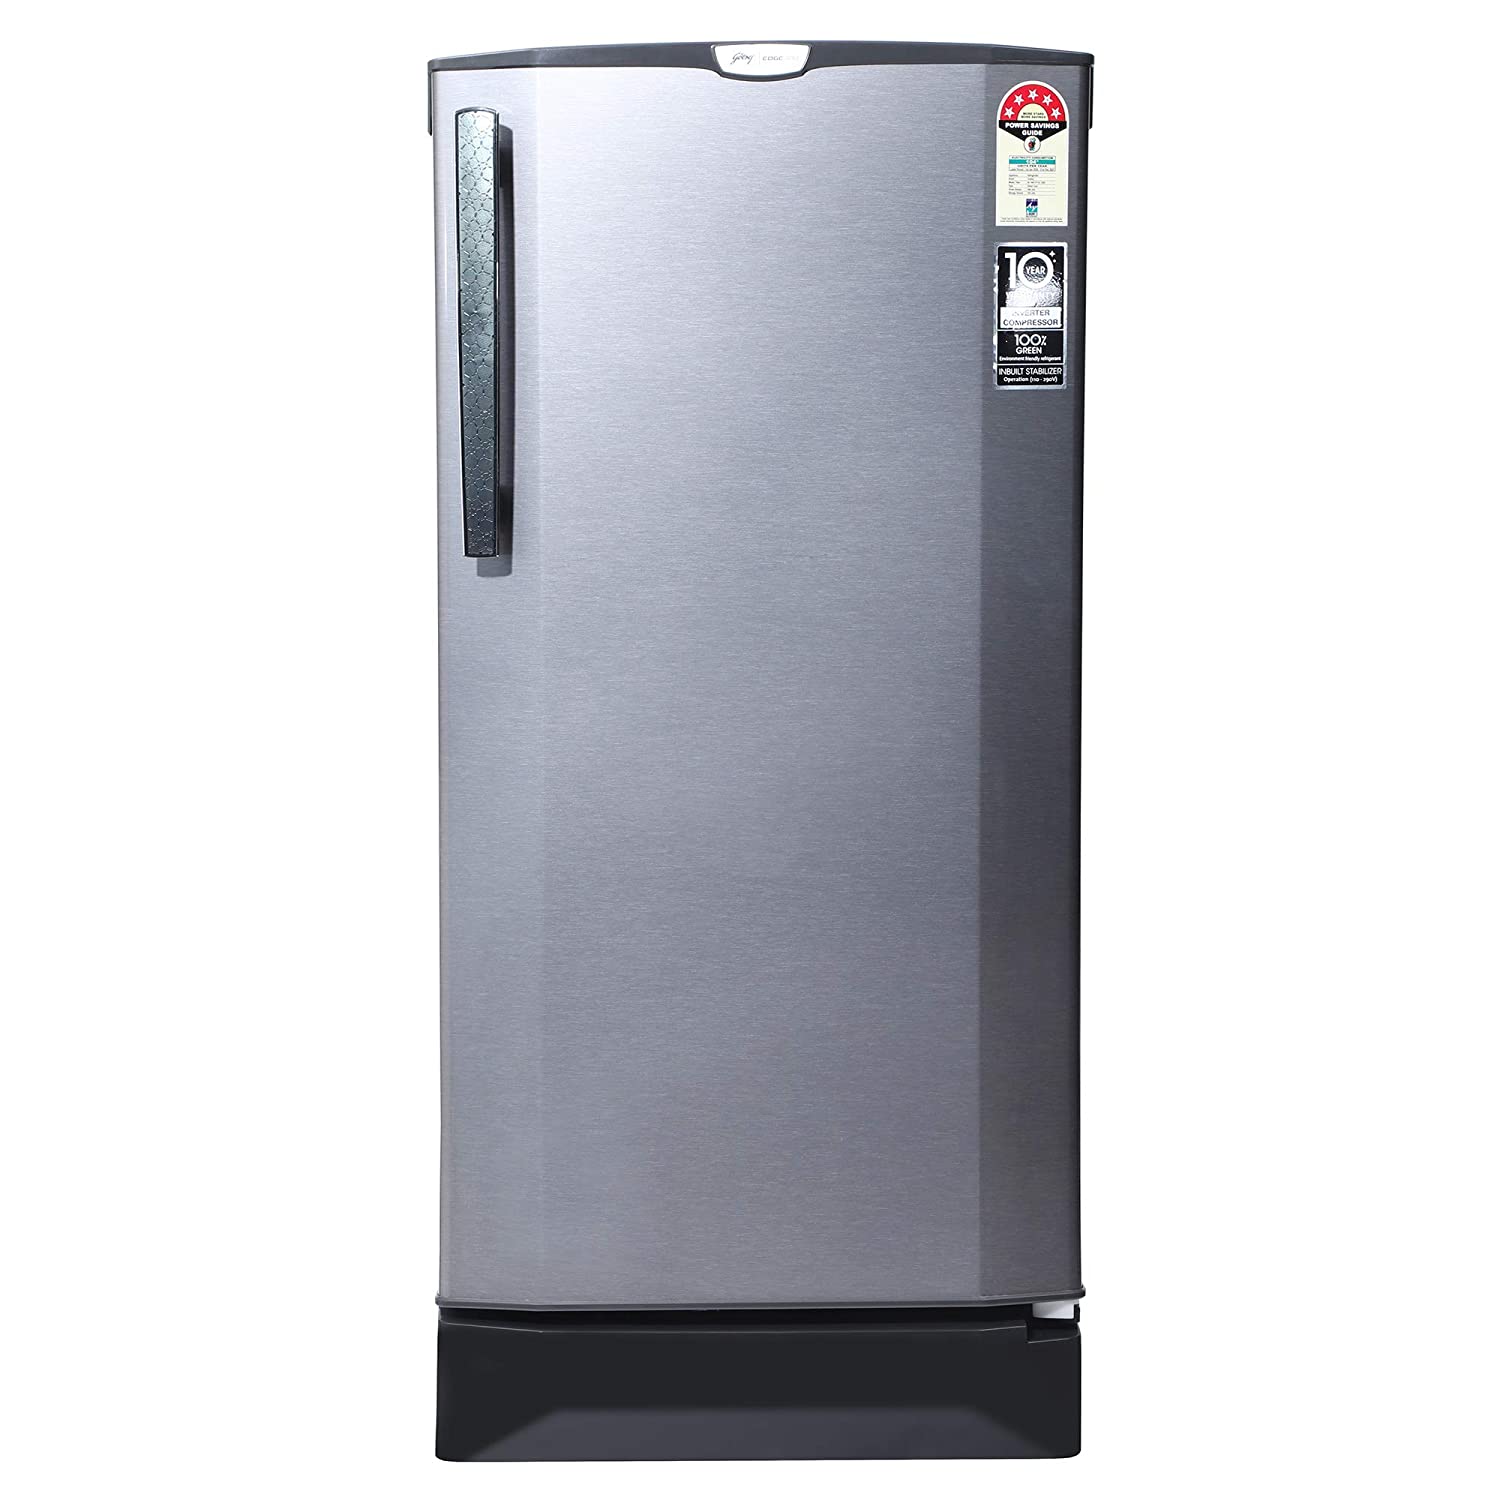 Godrej 190 L Inverter Direct-Cool Single Door Refrigerator